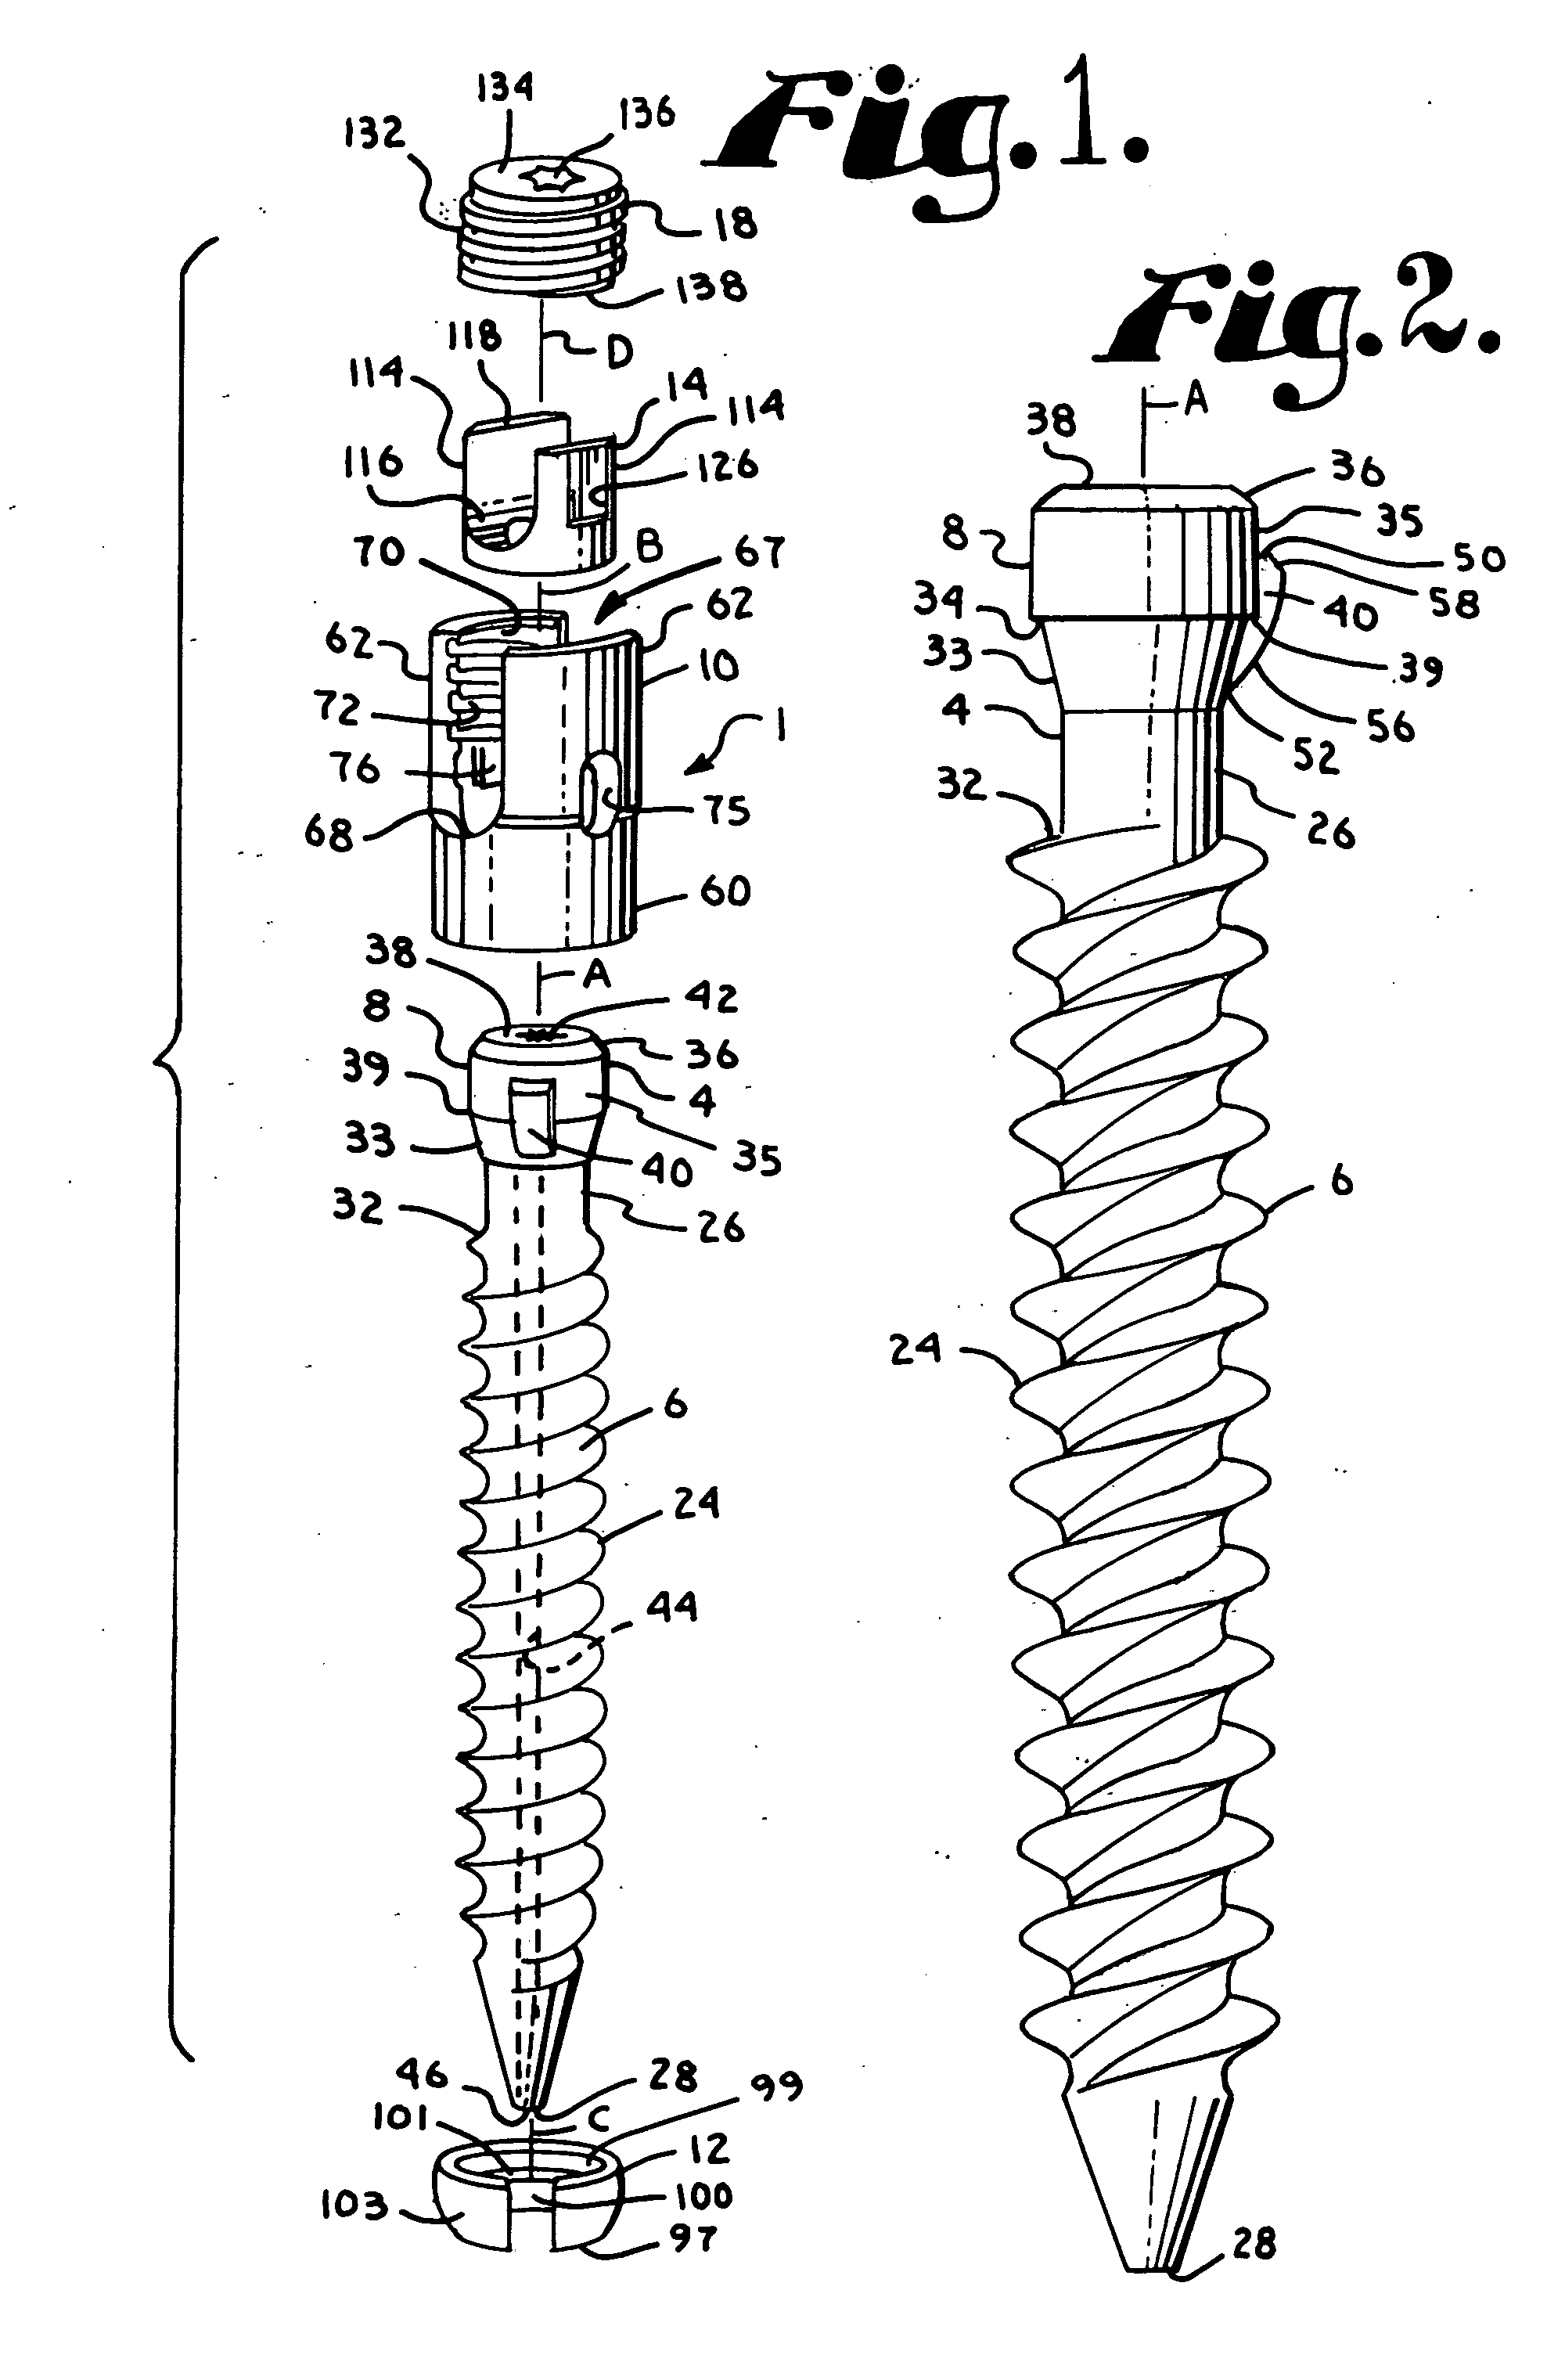 Polyaxial bone screw with shank-retainer insert capture